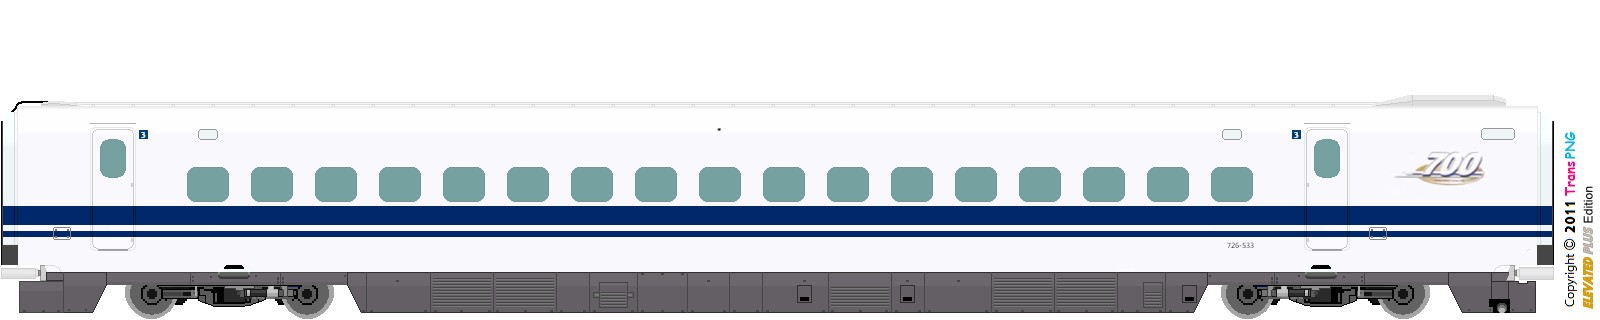 9010 - [9010] Central Japan Railway 52287586143_cbd66db0b4_o